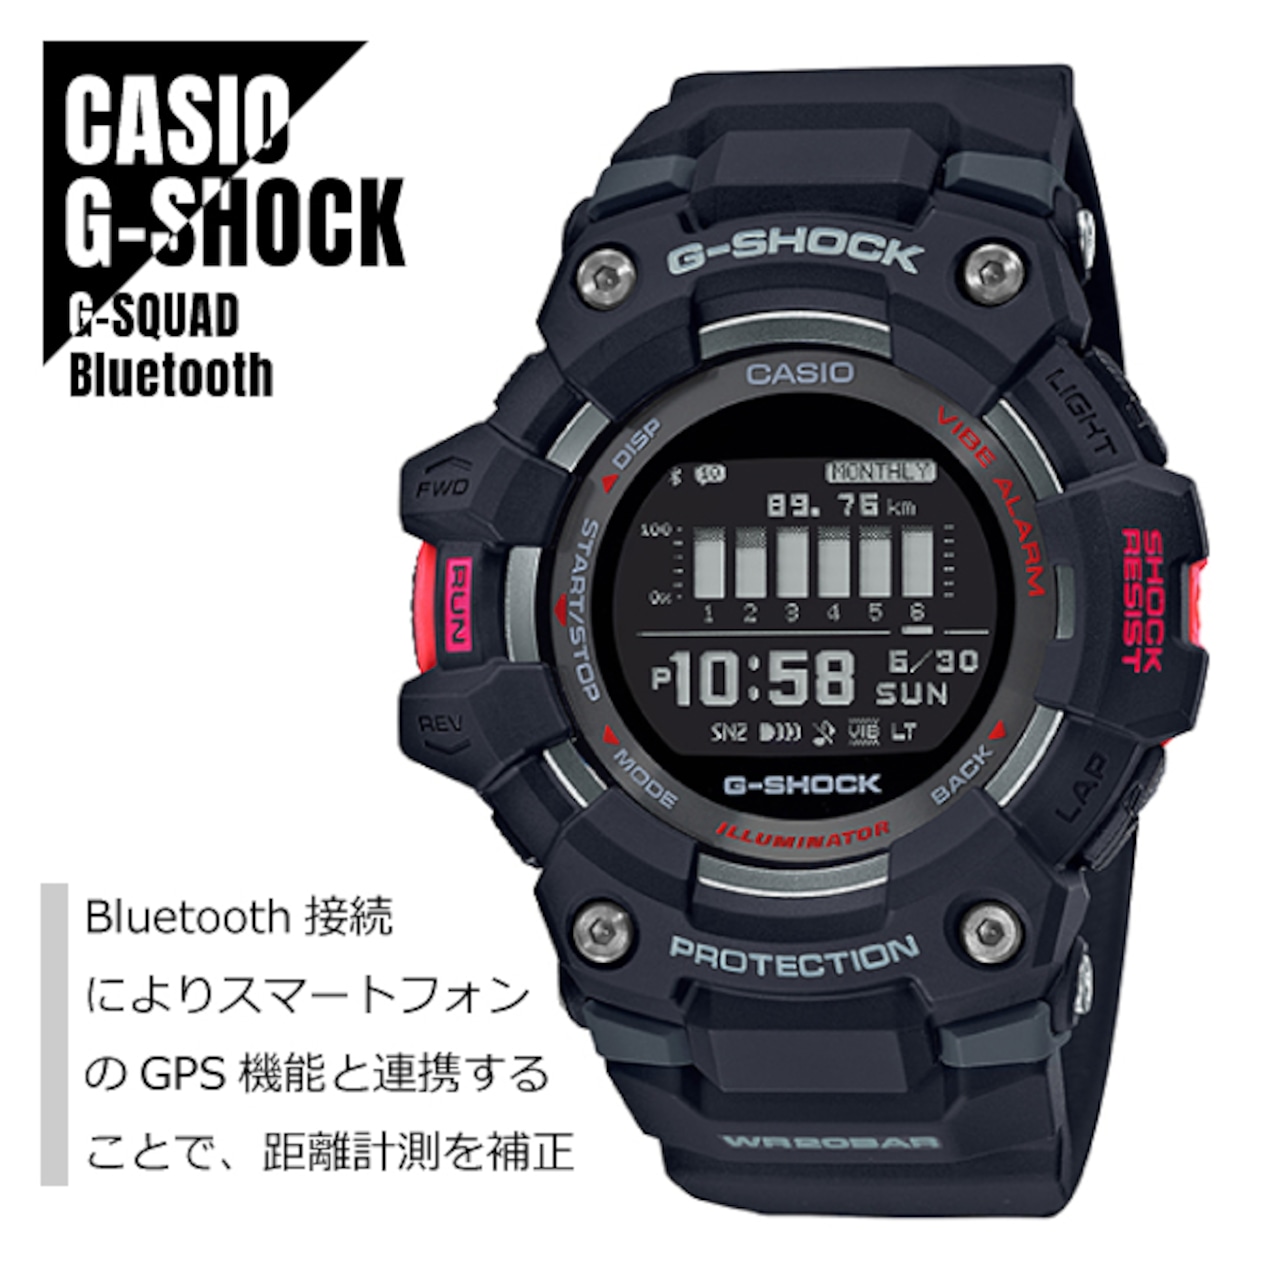 CASIO カシオ G-SHOCK Gショック G-SQUAD Gスクワッド スマートフォンリンク Bluetooth通信 GBD-100-1 腕時計 メンズ